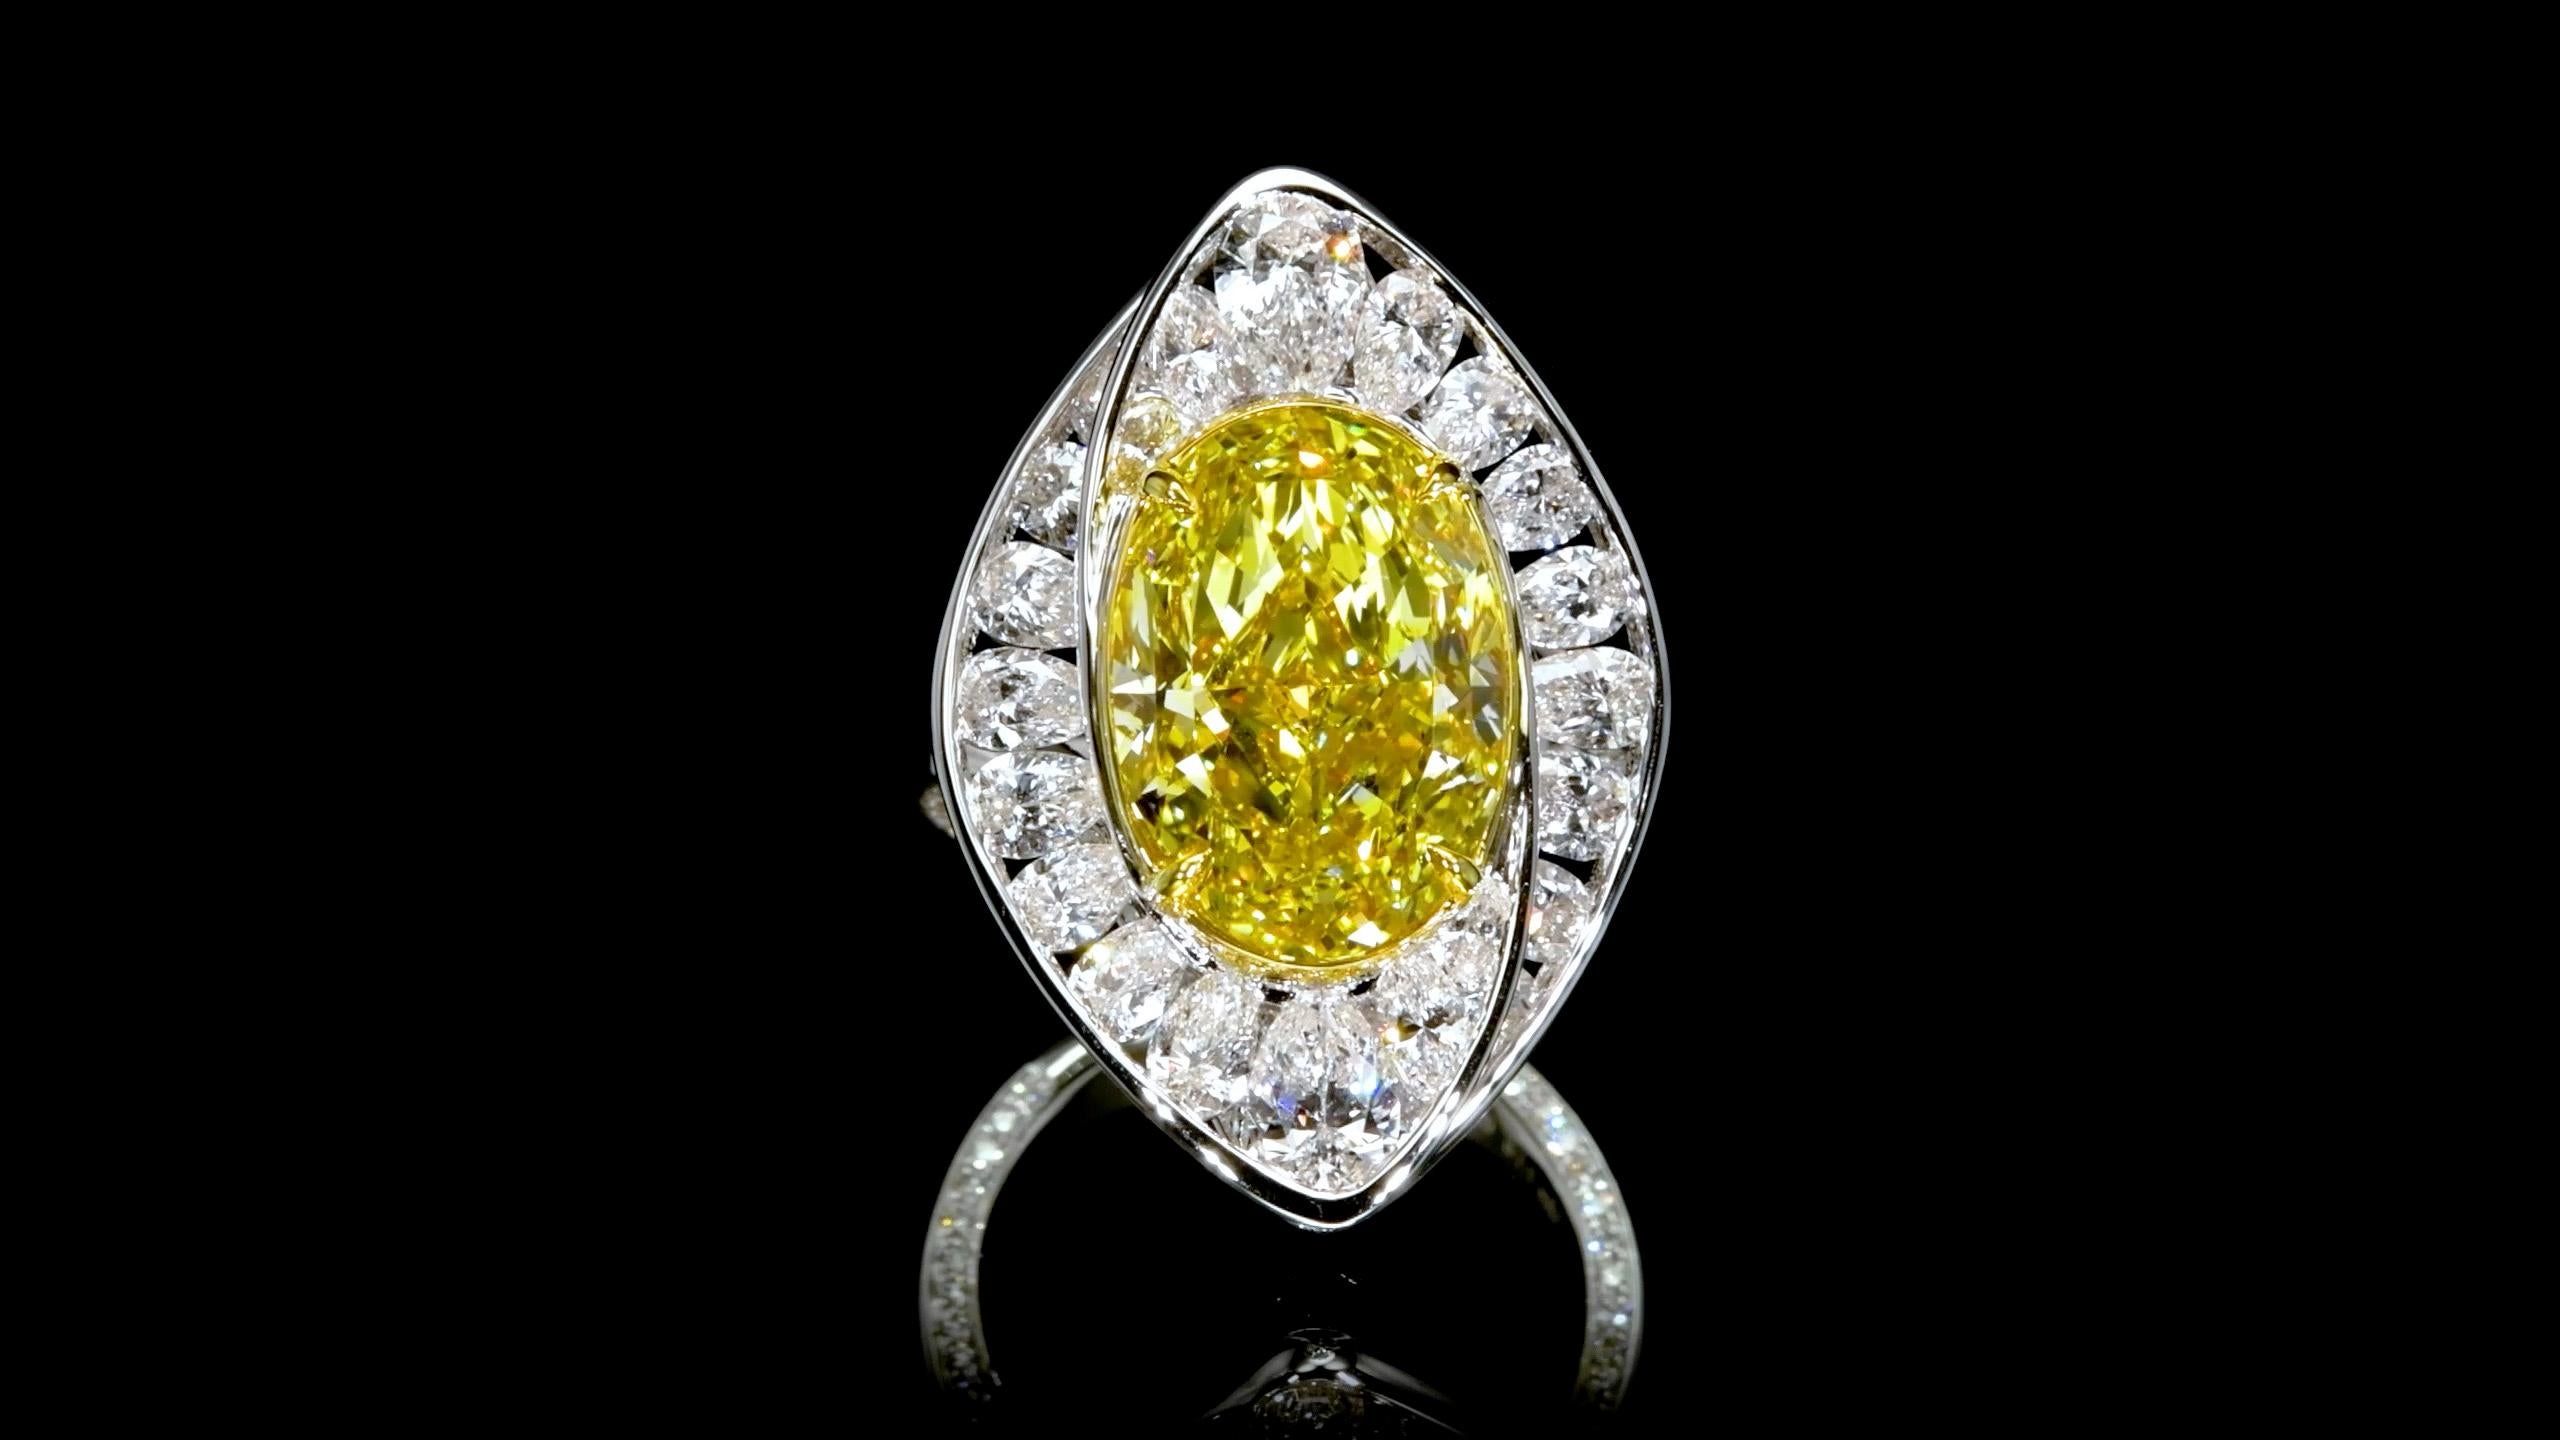 Oval Cut Emilio Jewelry Gia Certified 10.50 Carat Fancy Deep Yellow Diamond Ring  For Sale